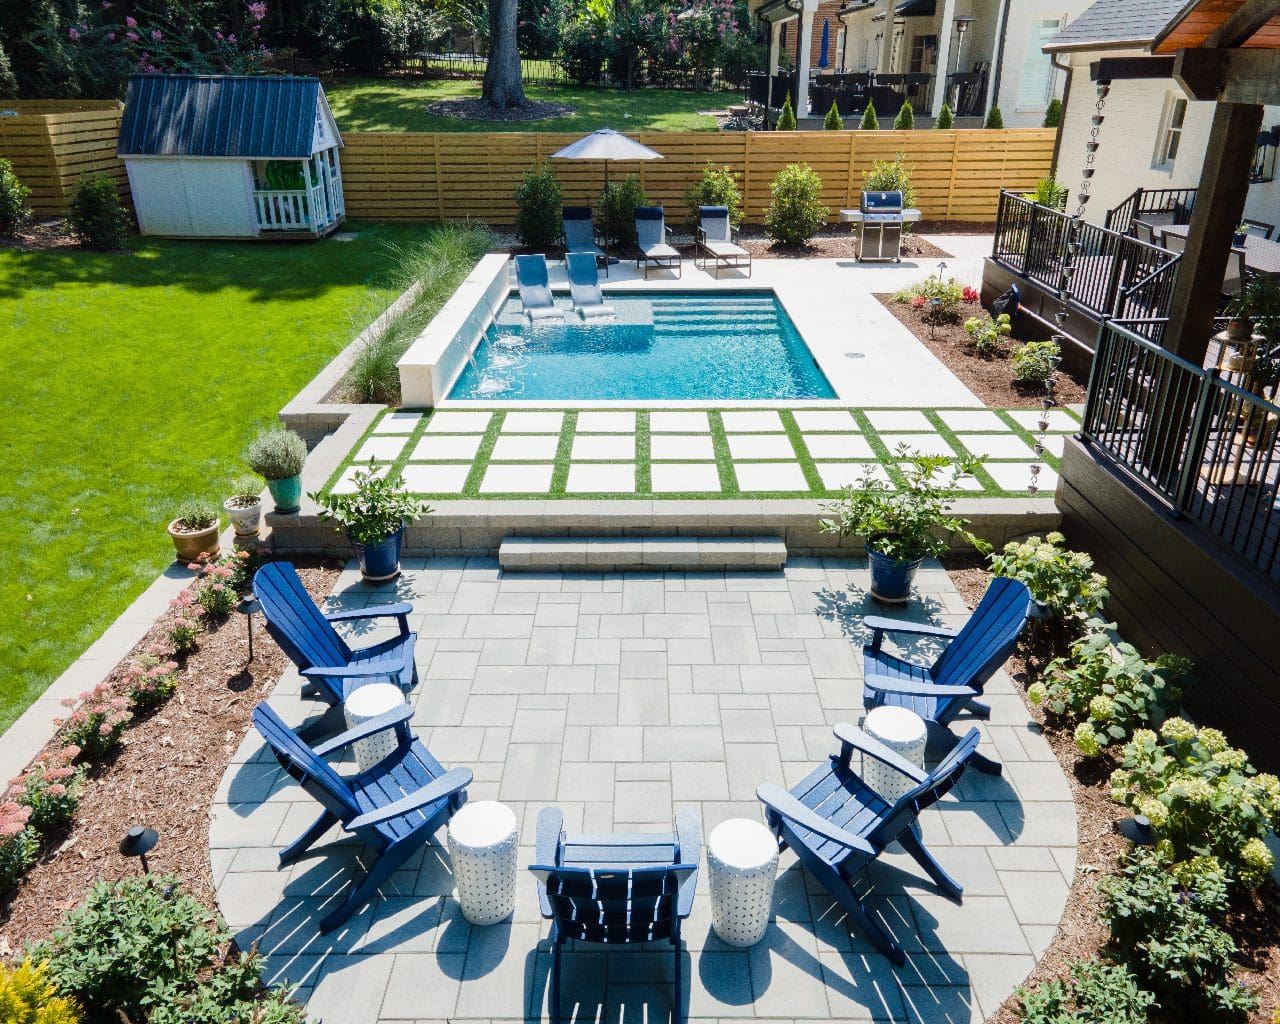 Hardscape patio and pool design in Charlotte backyard.